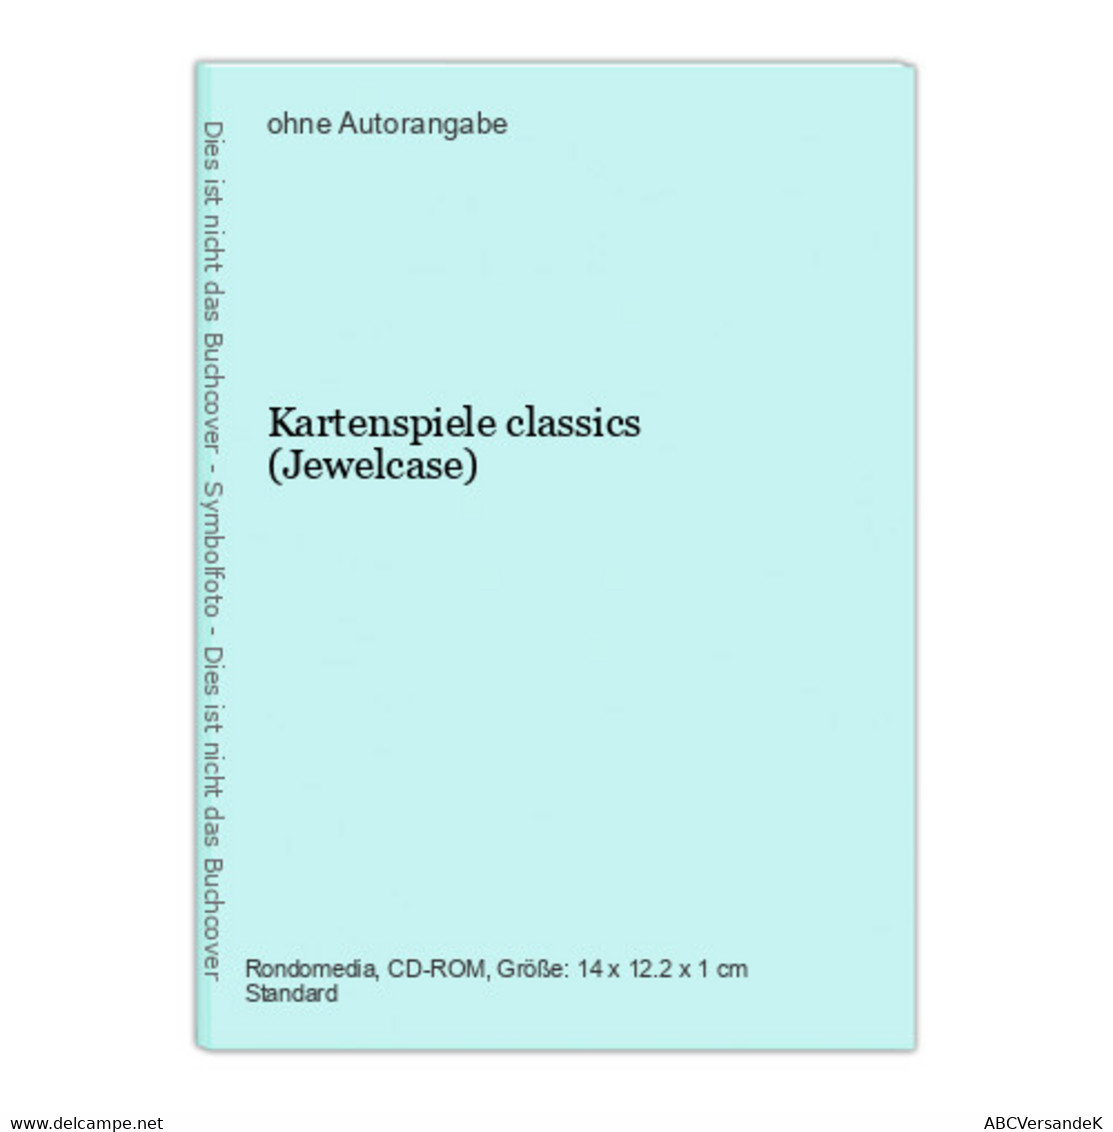 Kartenspiele Classics (Jewelcase) - CDs